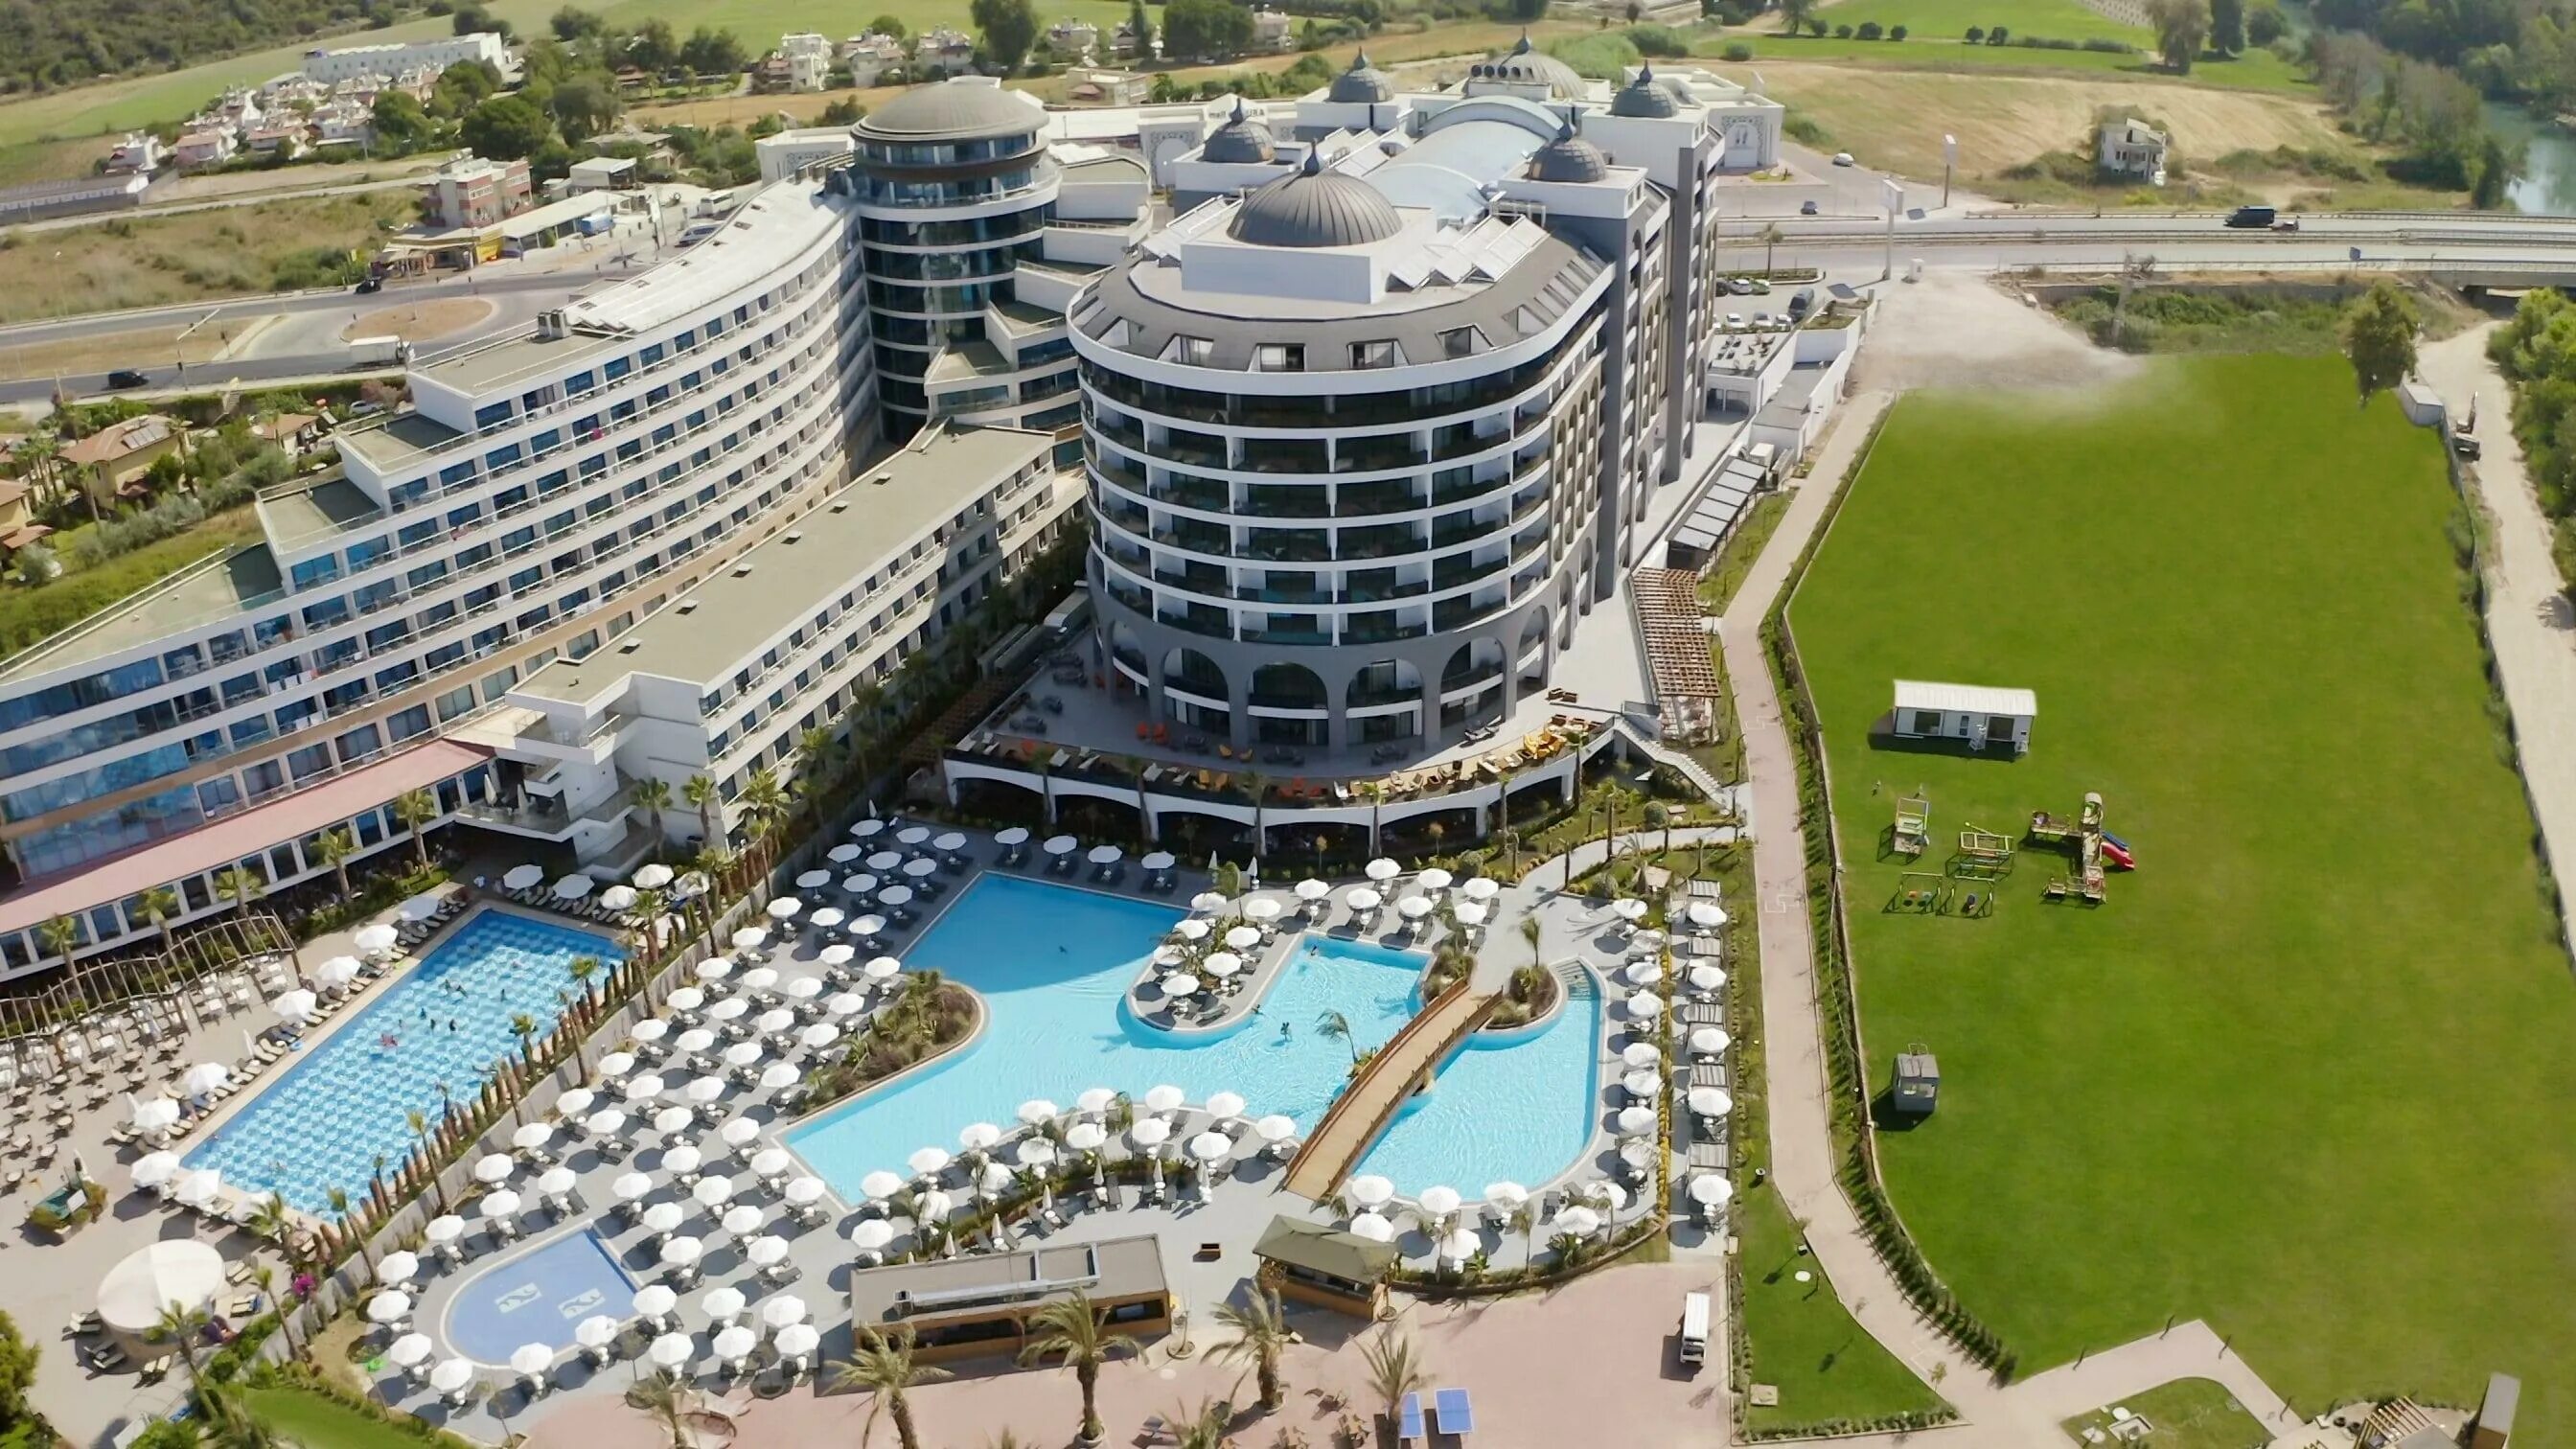 Sunthalia hotels resorts 5. Alarcha Hotels Resorts 5 Турция. Аларча отель Резорт Турция. Alarcha 5 Сиде. Alarcha Hotels & Resorts, Турция, Манавгат.